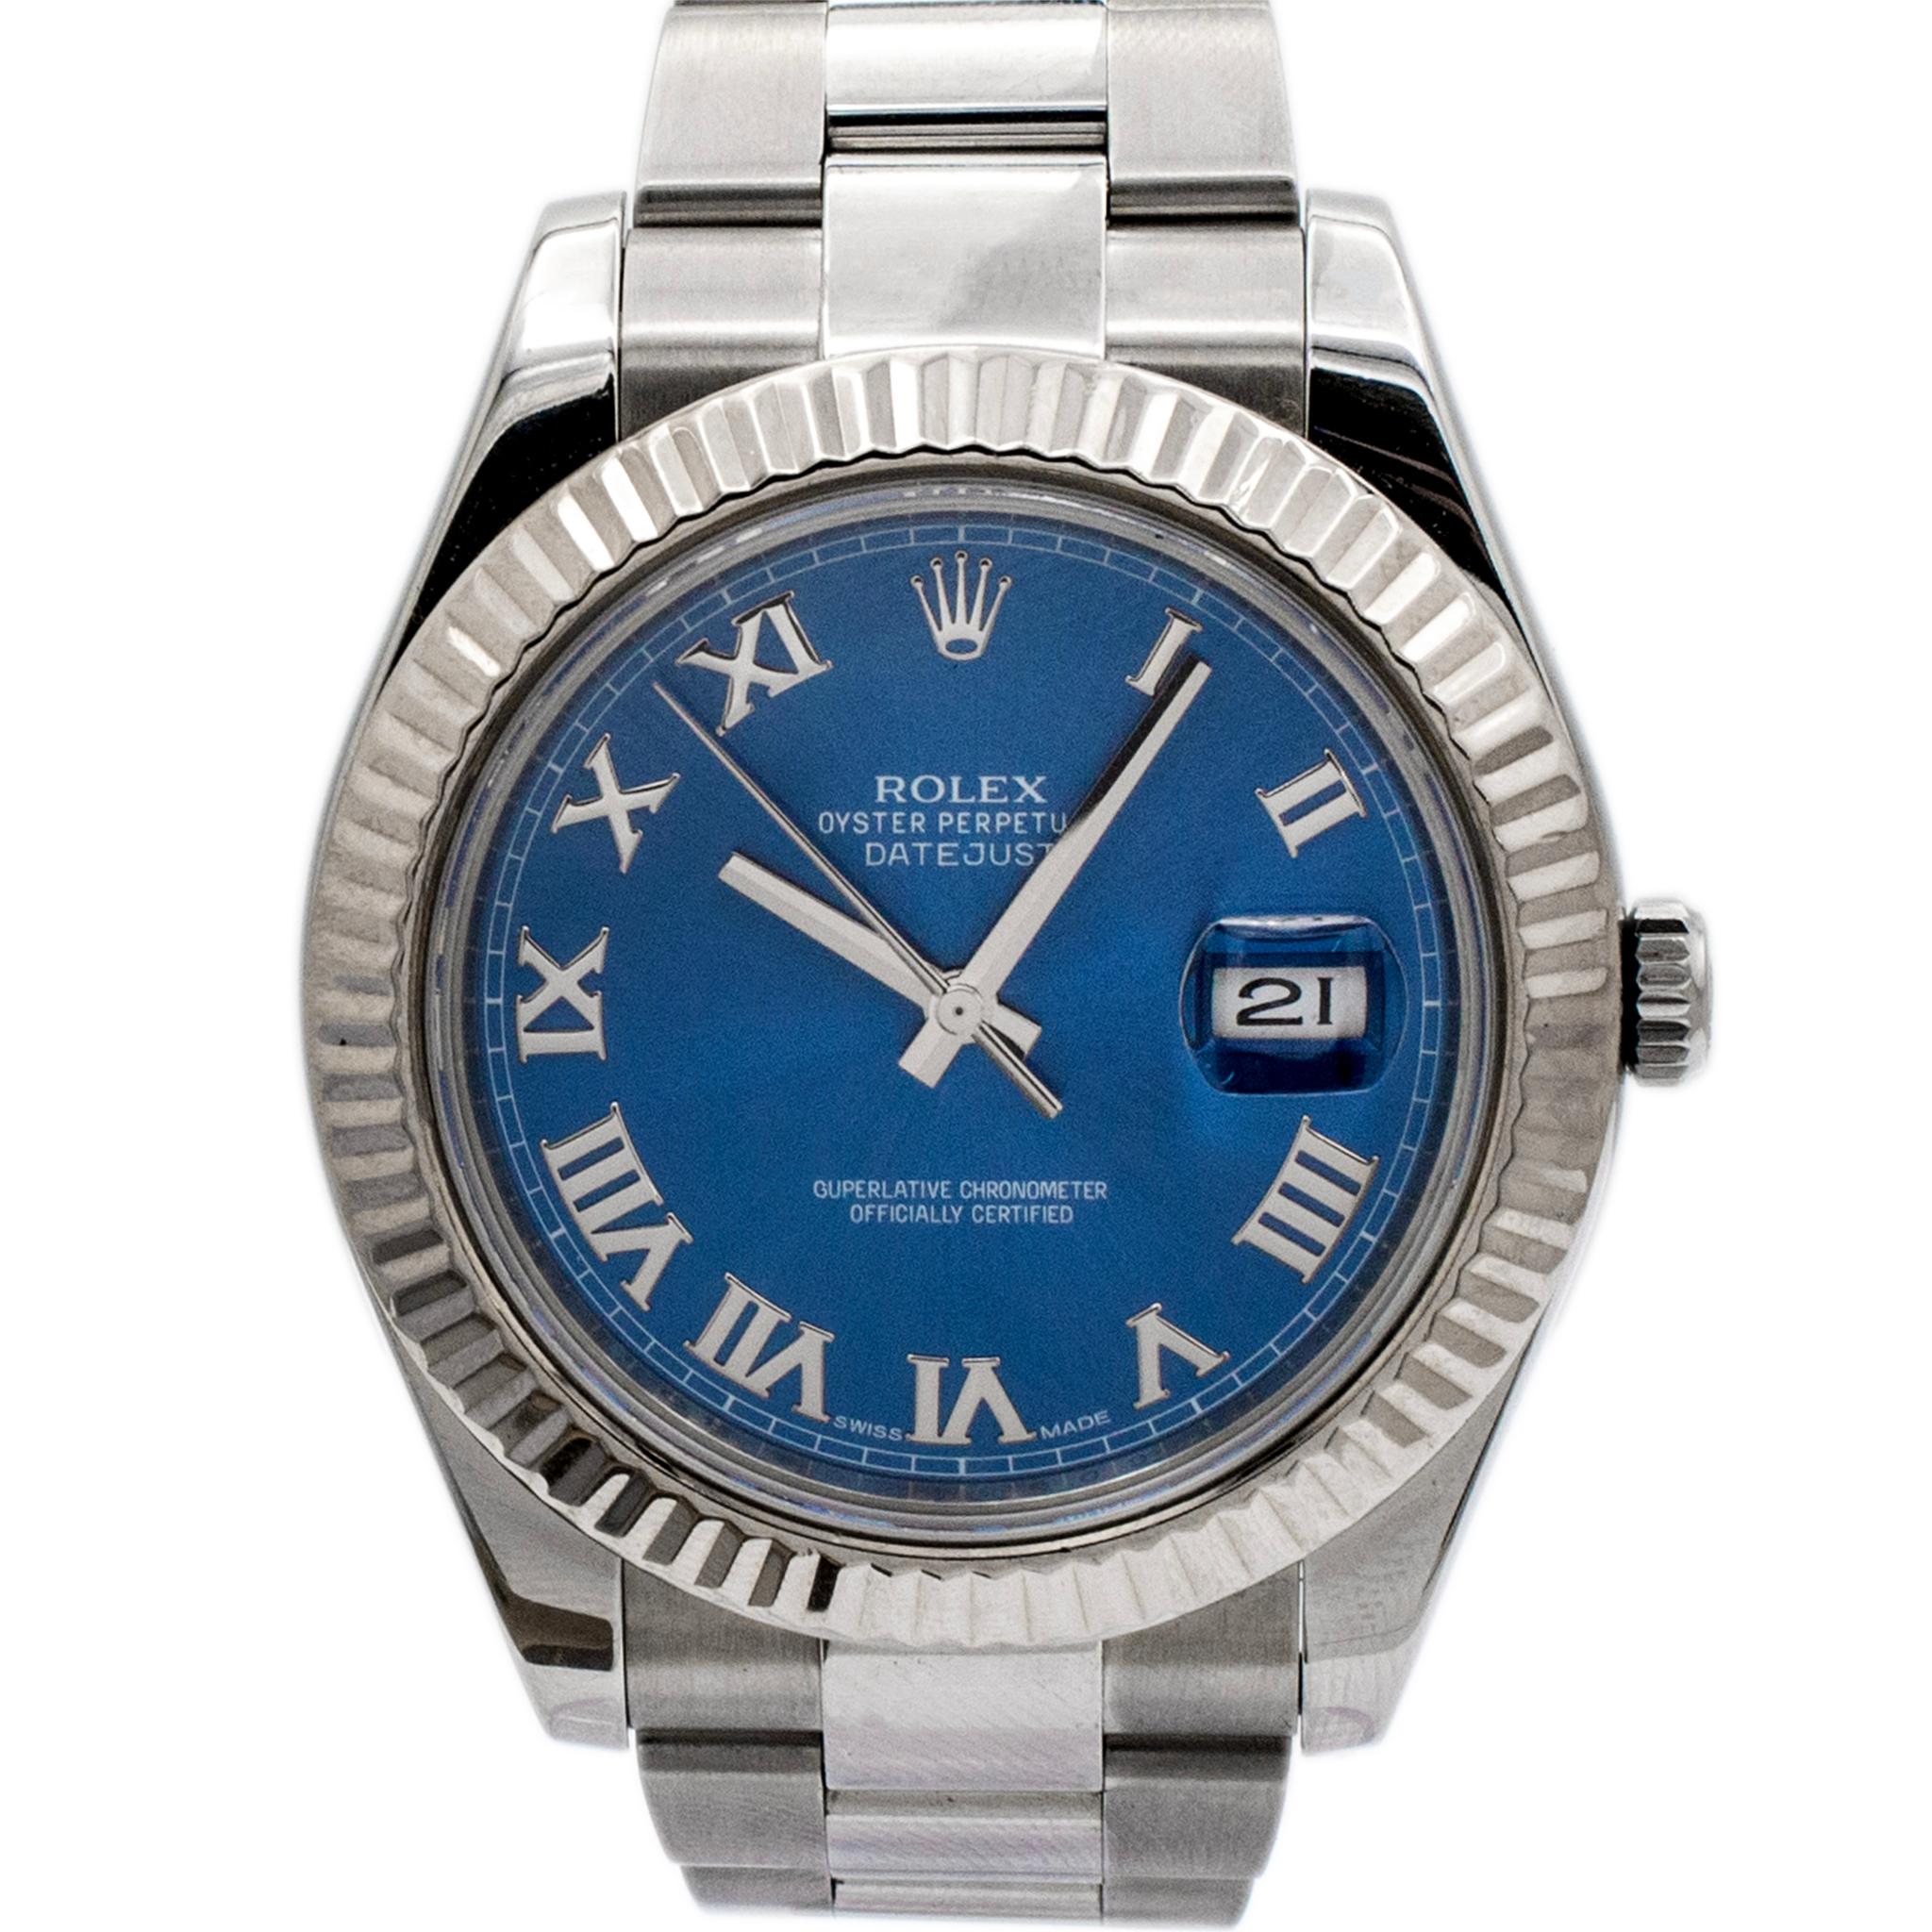 Brand: Rolex 

Gender: Men's

Metal Type: Stainless Steel

Diameter:  41.00 mm

Weight: 145.30 grams

Stainless steel ROLEX Swiss made watch with original box. The 